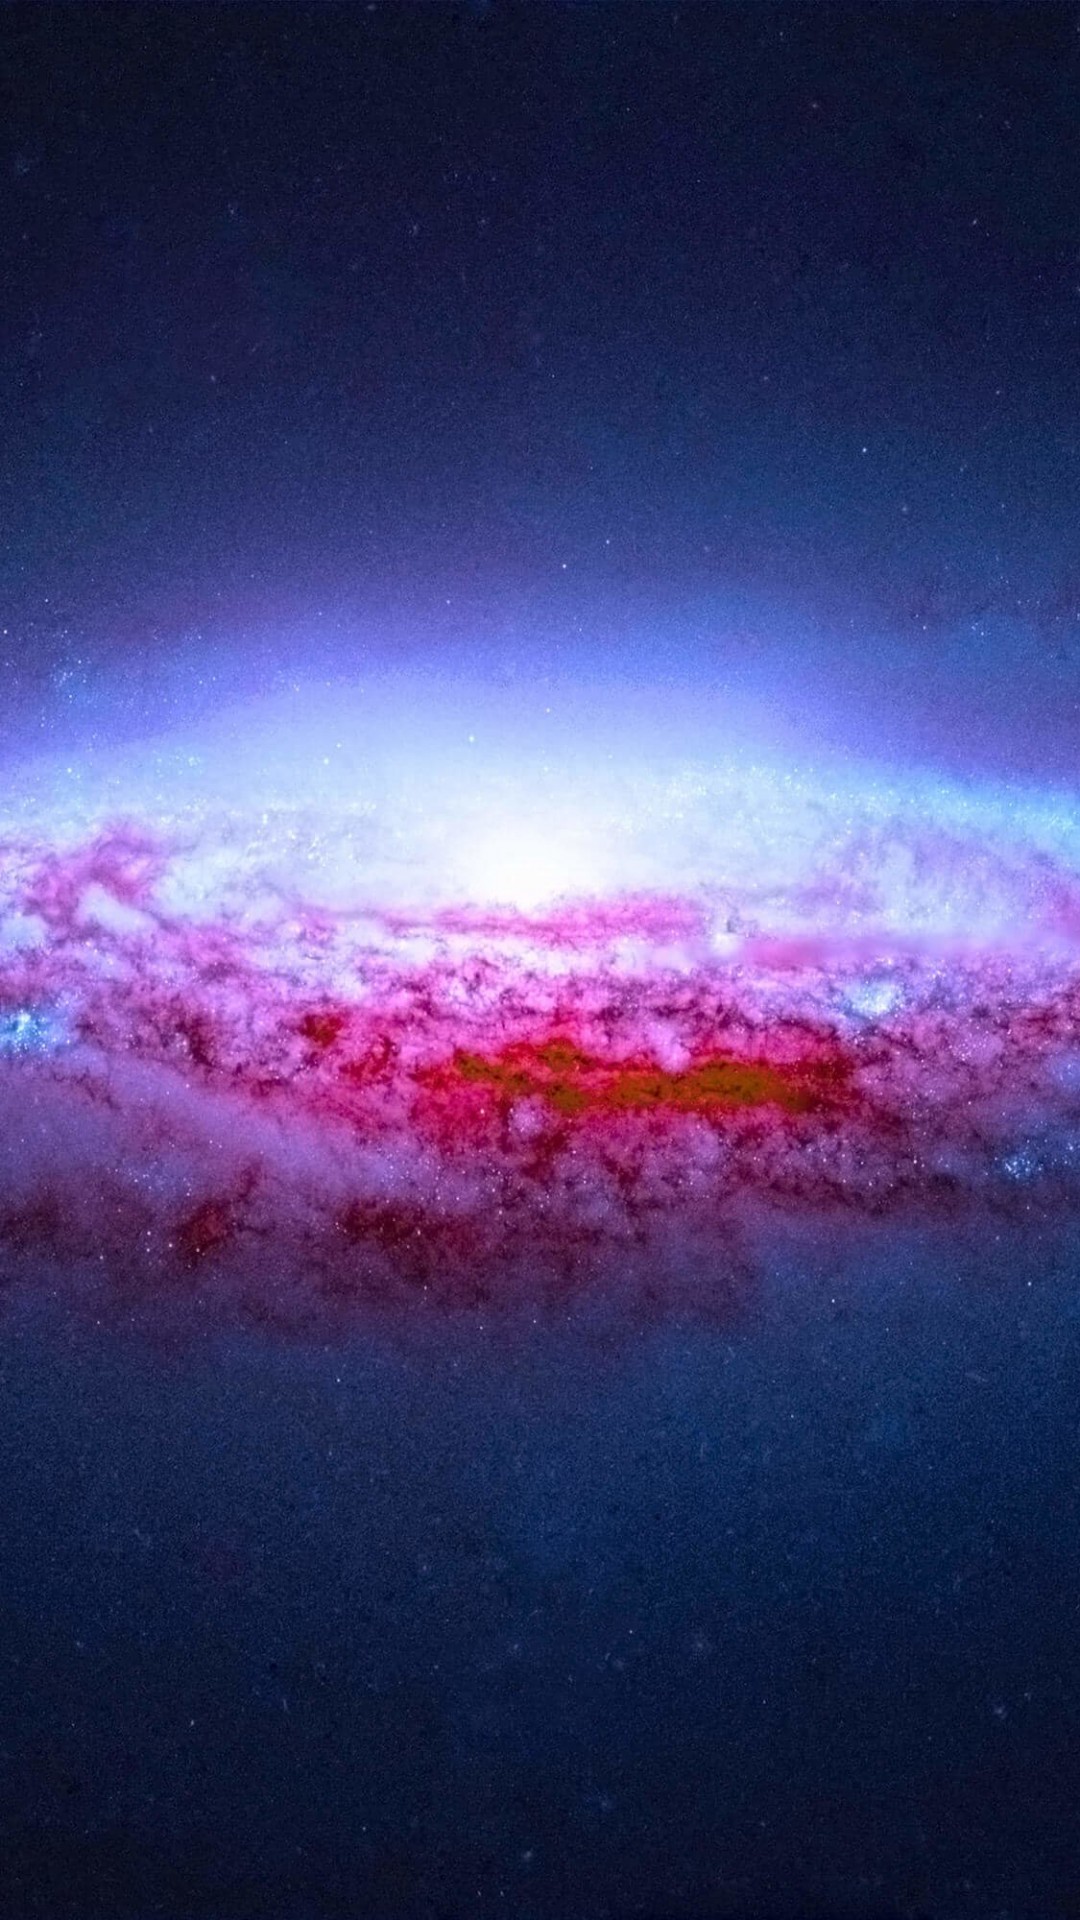 NGC 2683 Spiral Galaxy Wallpaper for Motorola Moto X